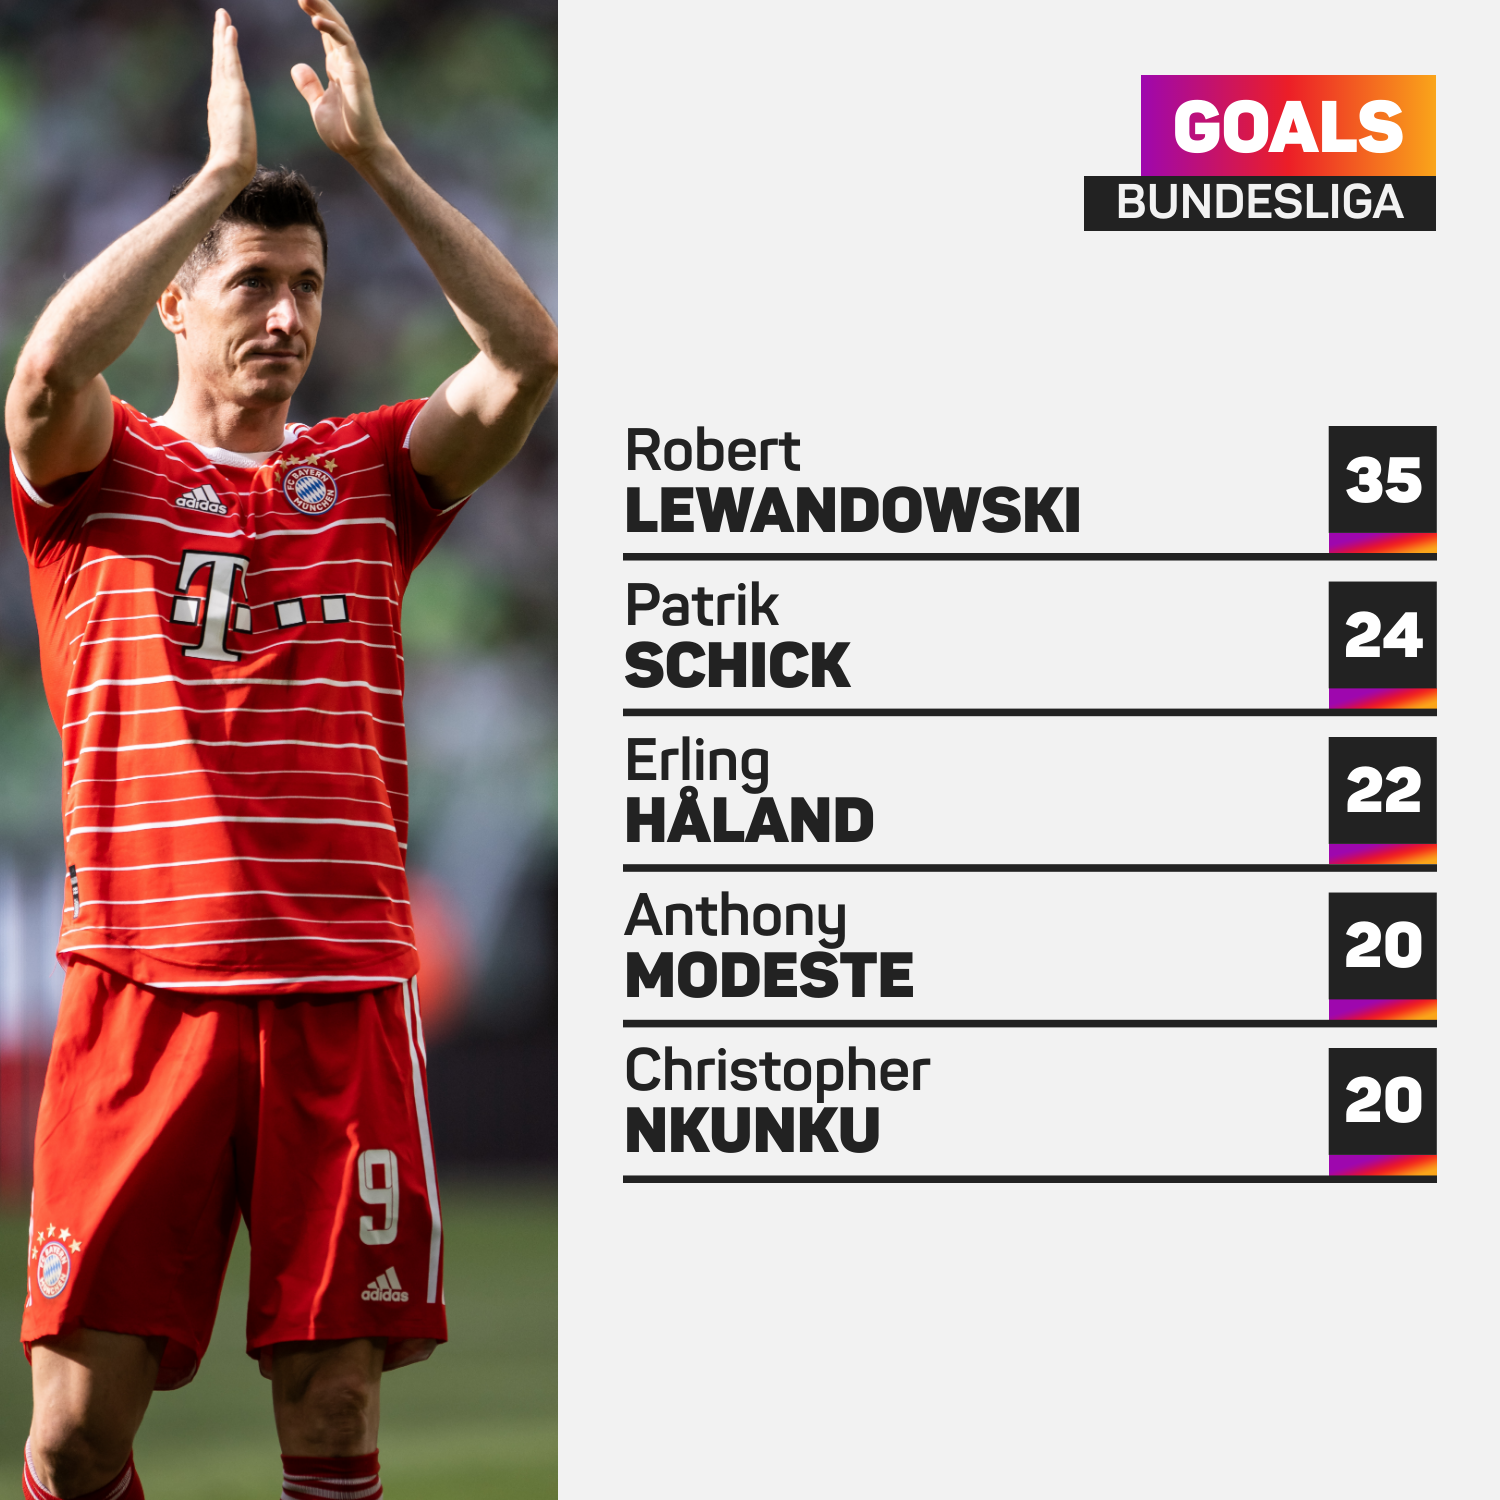 Robert Lewandowski scored 35 league goals in his final season at Bayern Munich